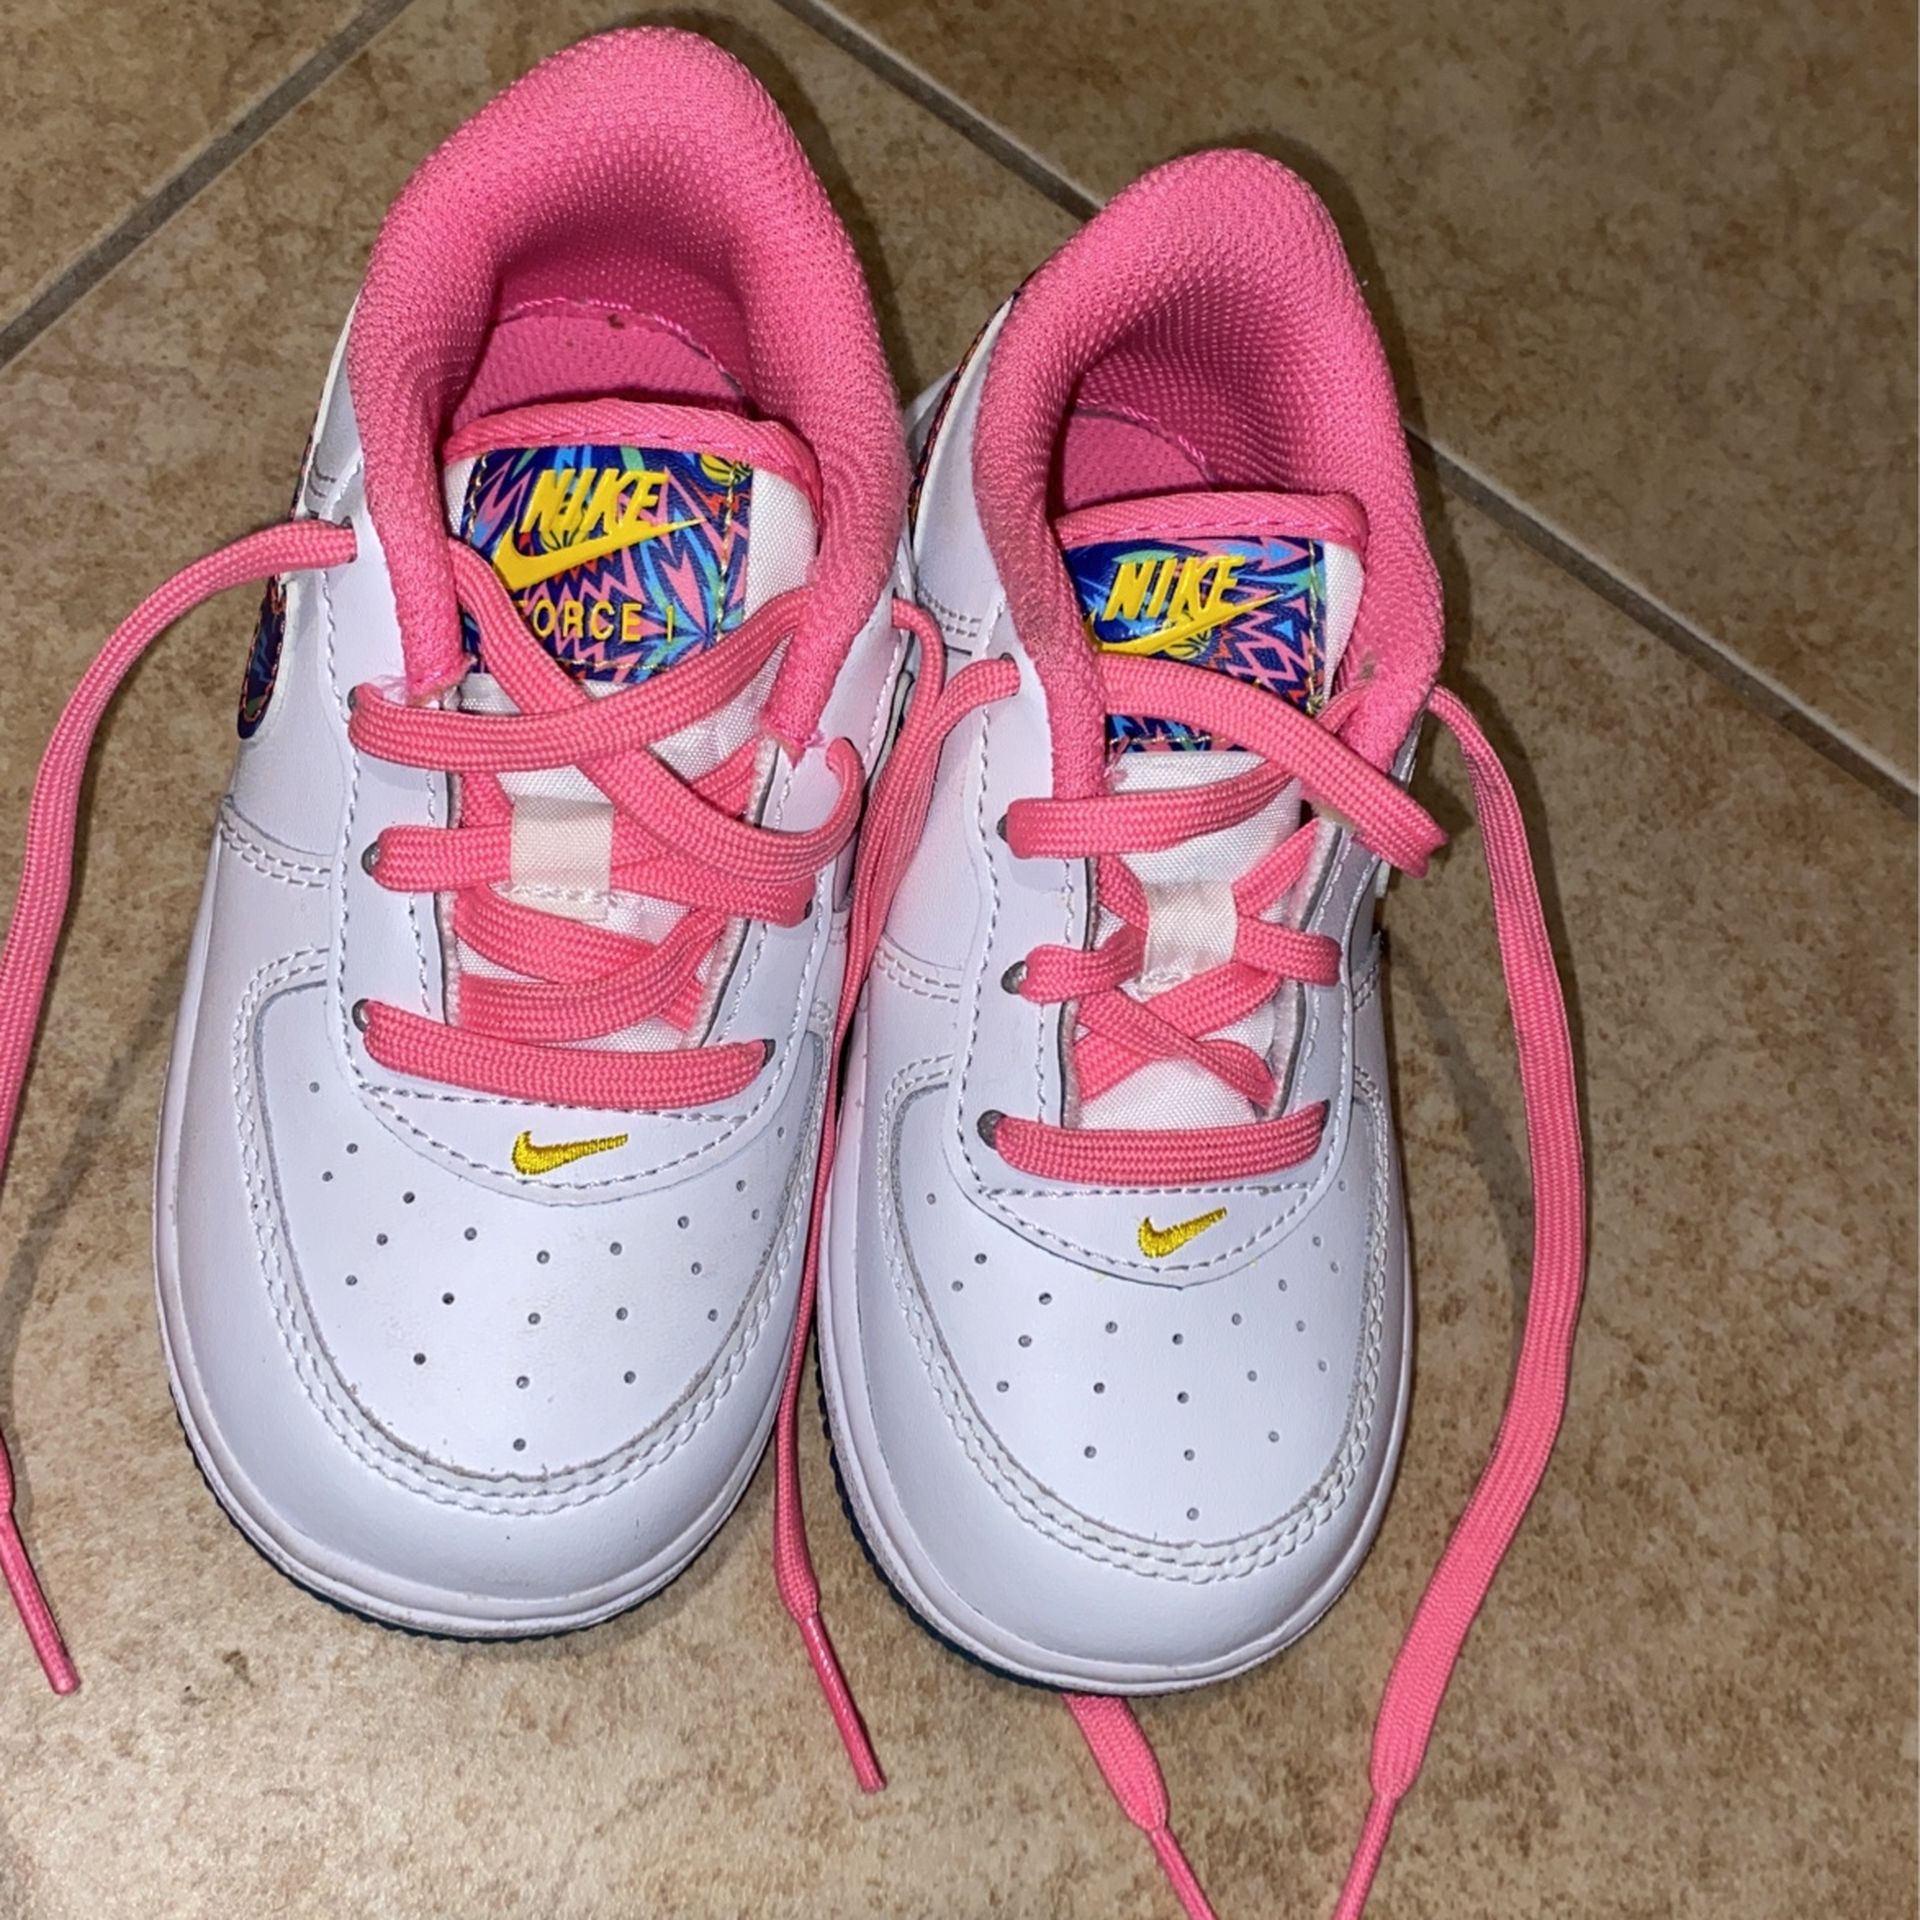 Nike Brand Toddler Tennis Shoes